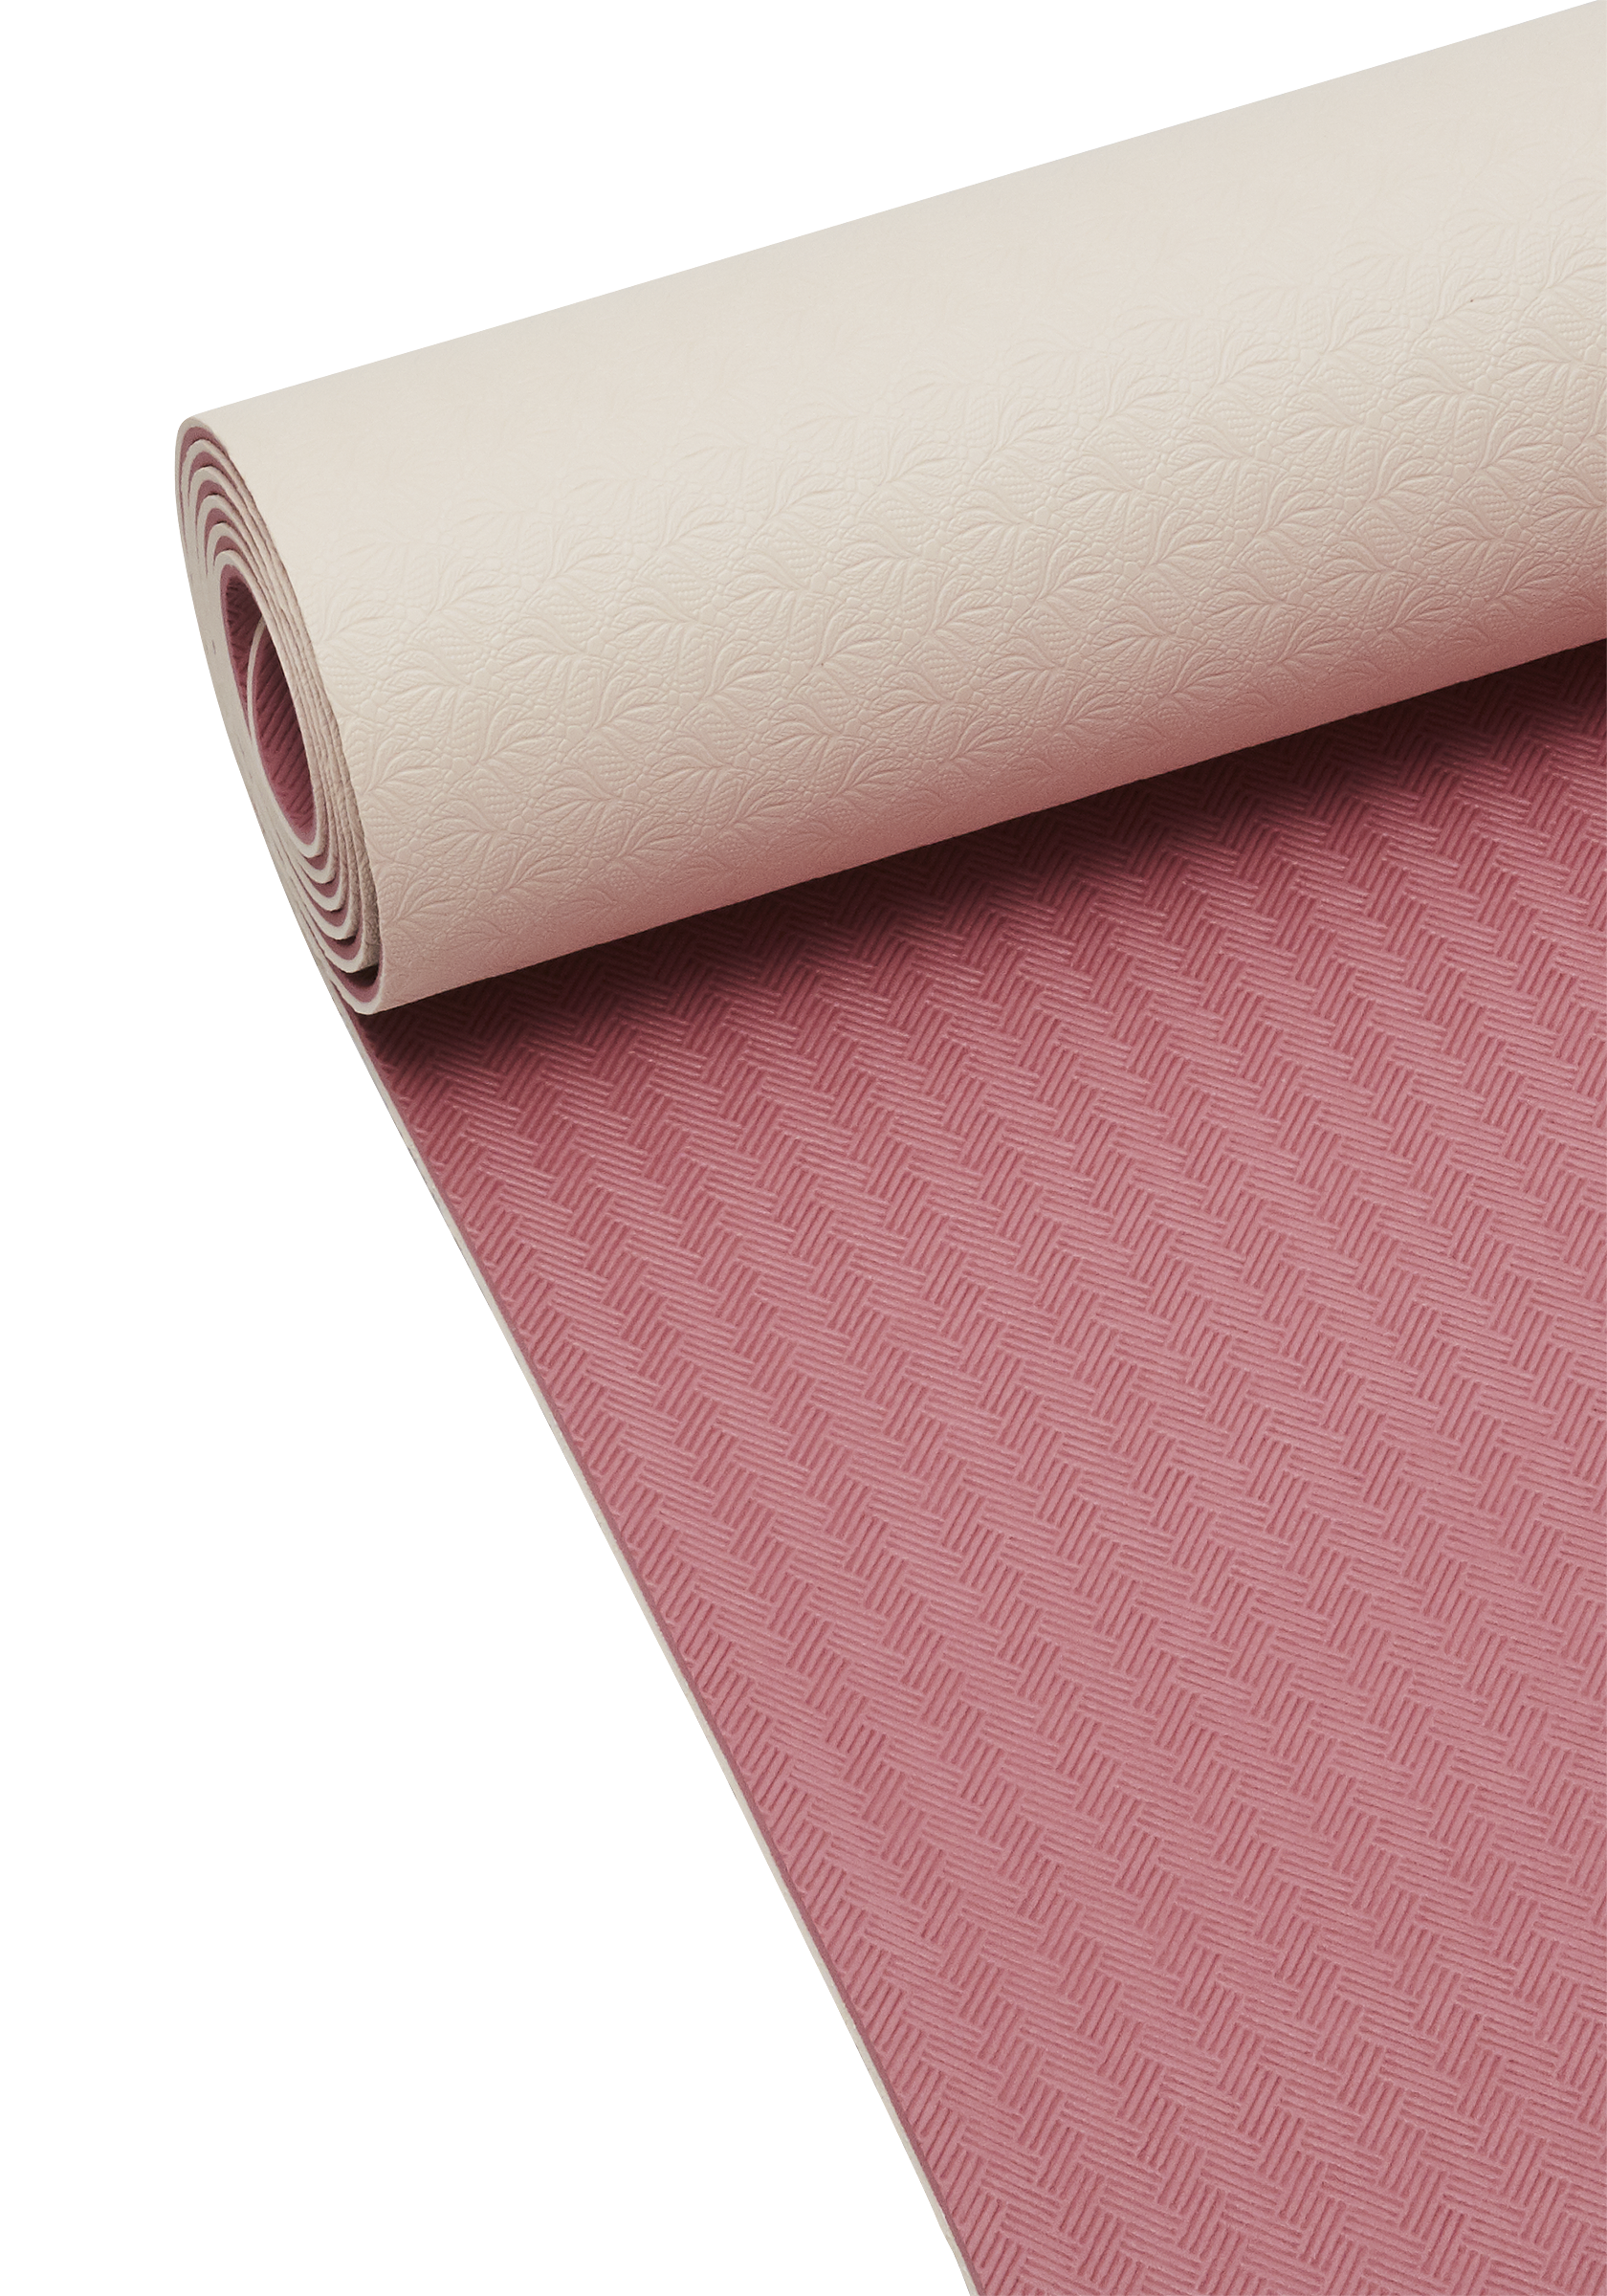 Yoga mat position 4mm - Beige/Pink